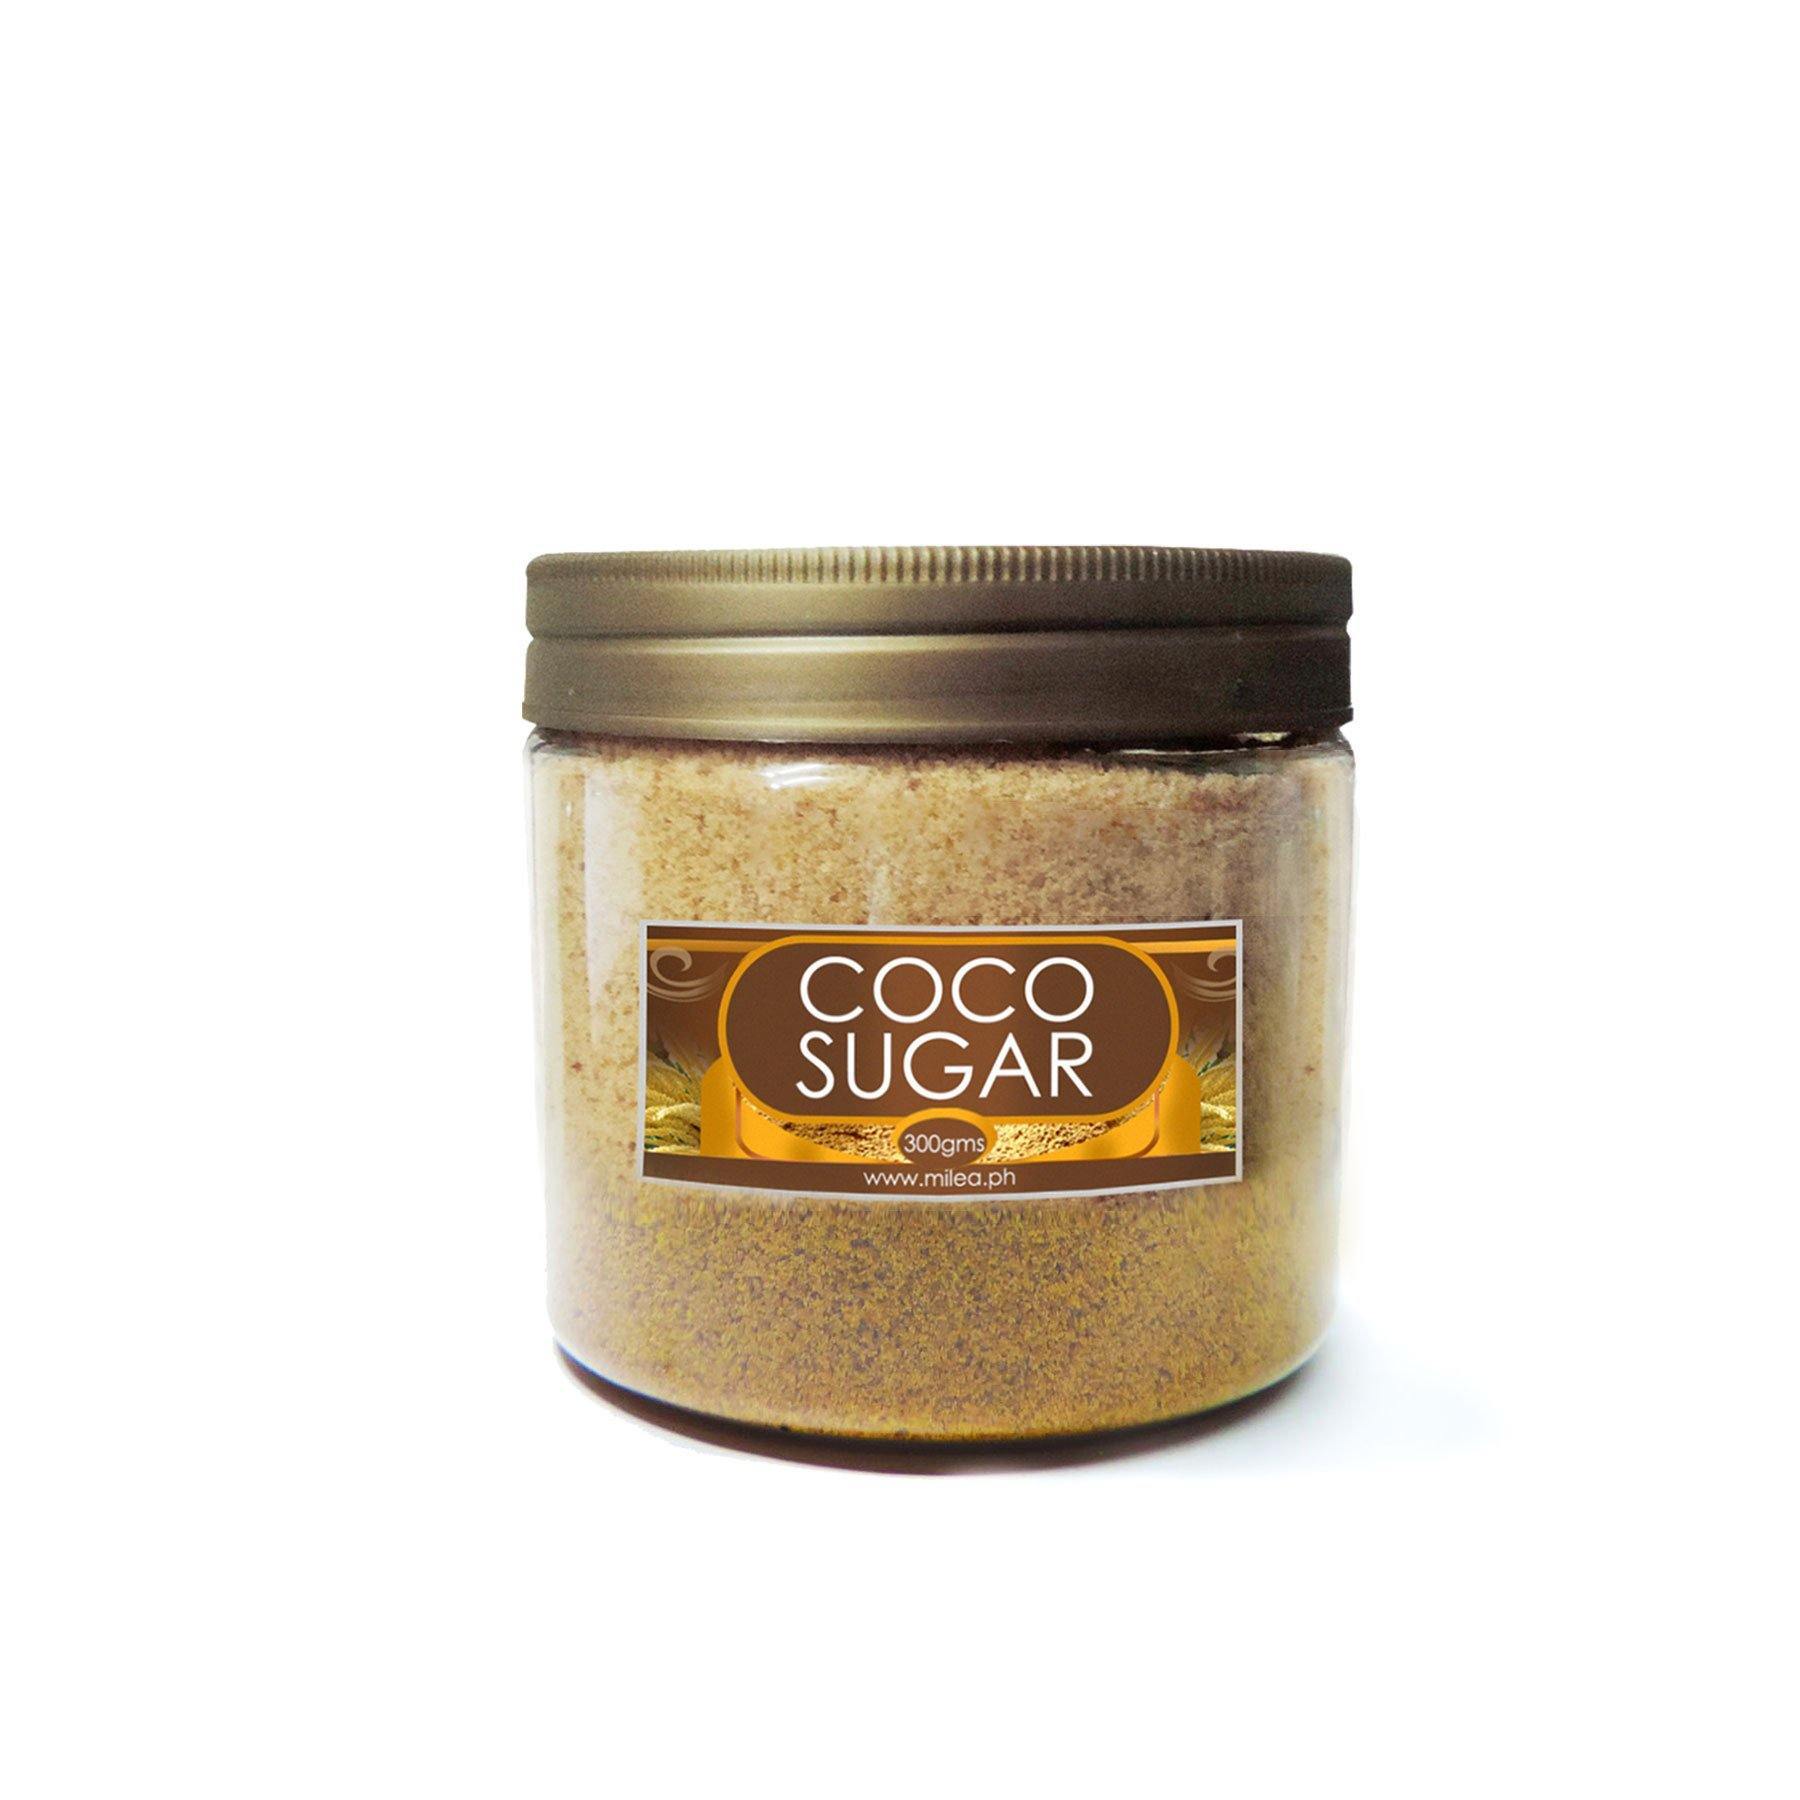 Coconut Sugar from Coconut Nectar - Milea All Organics - Philippines